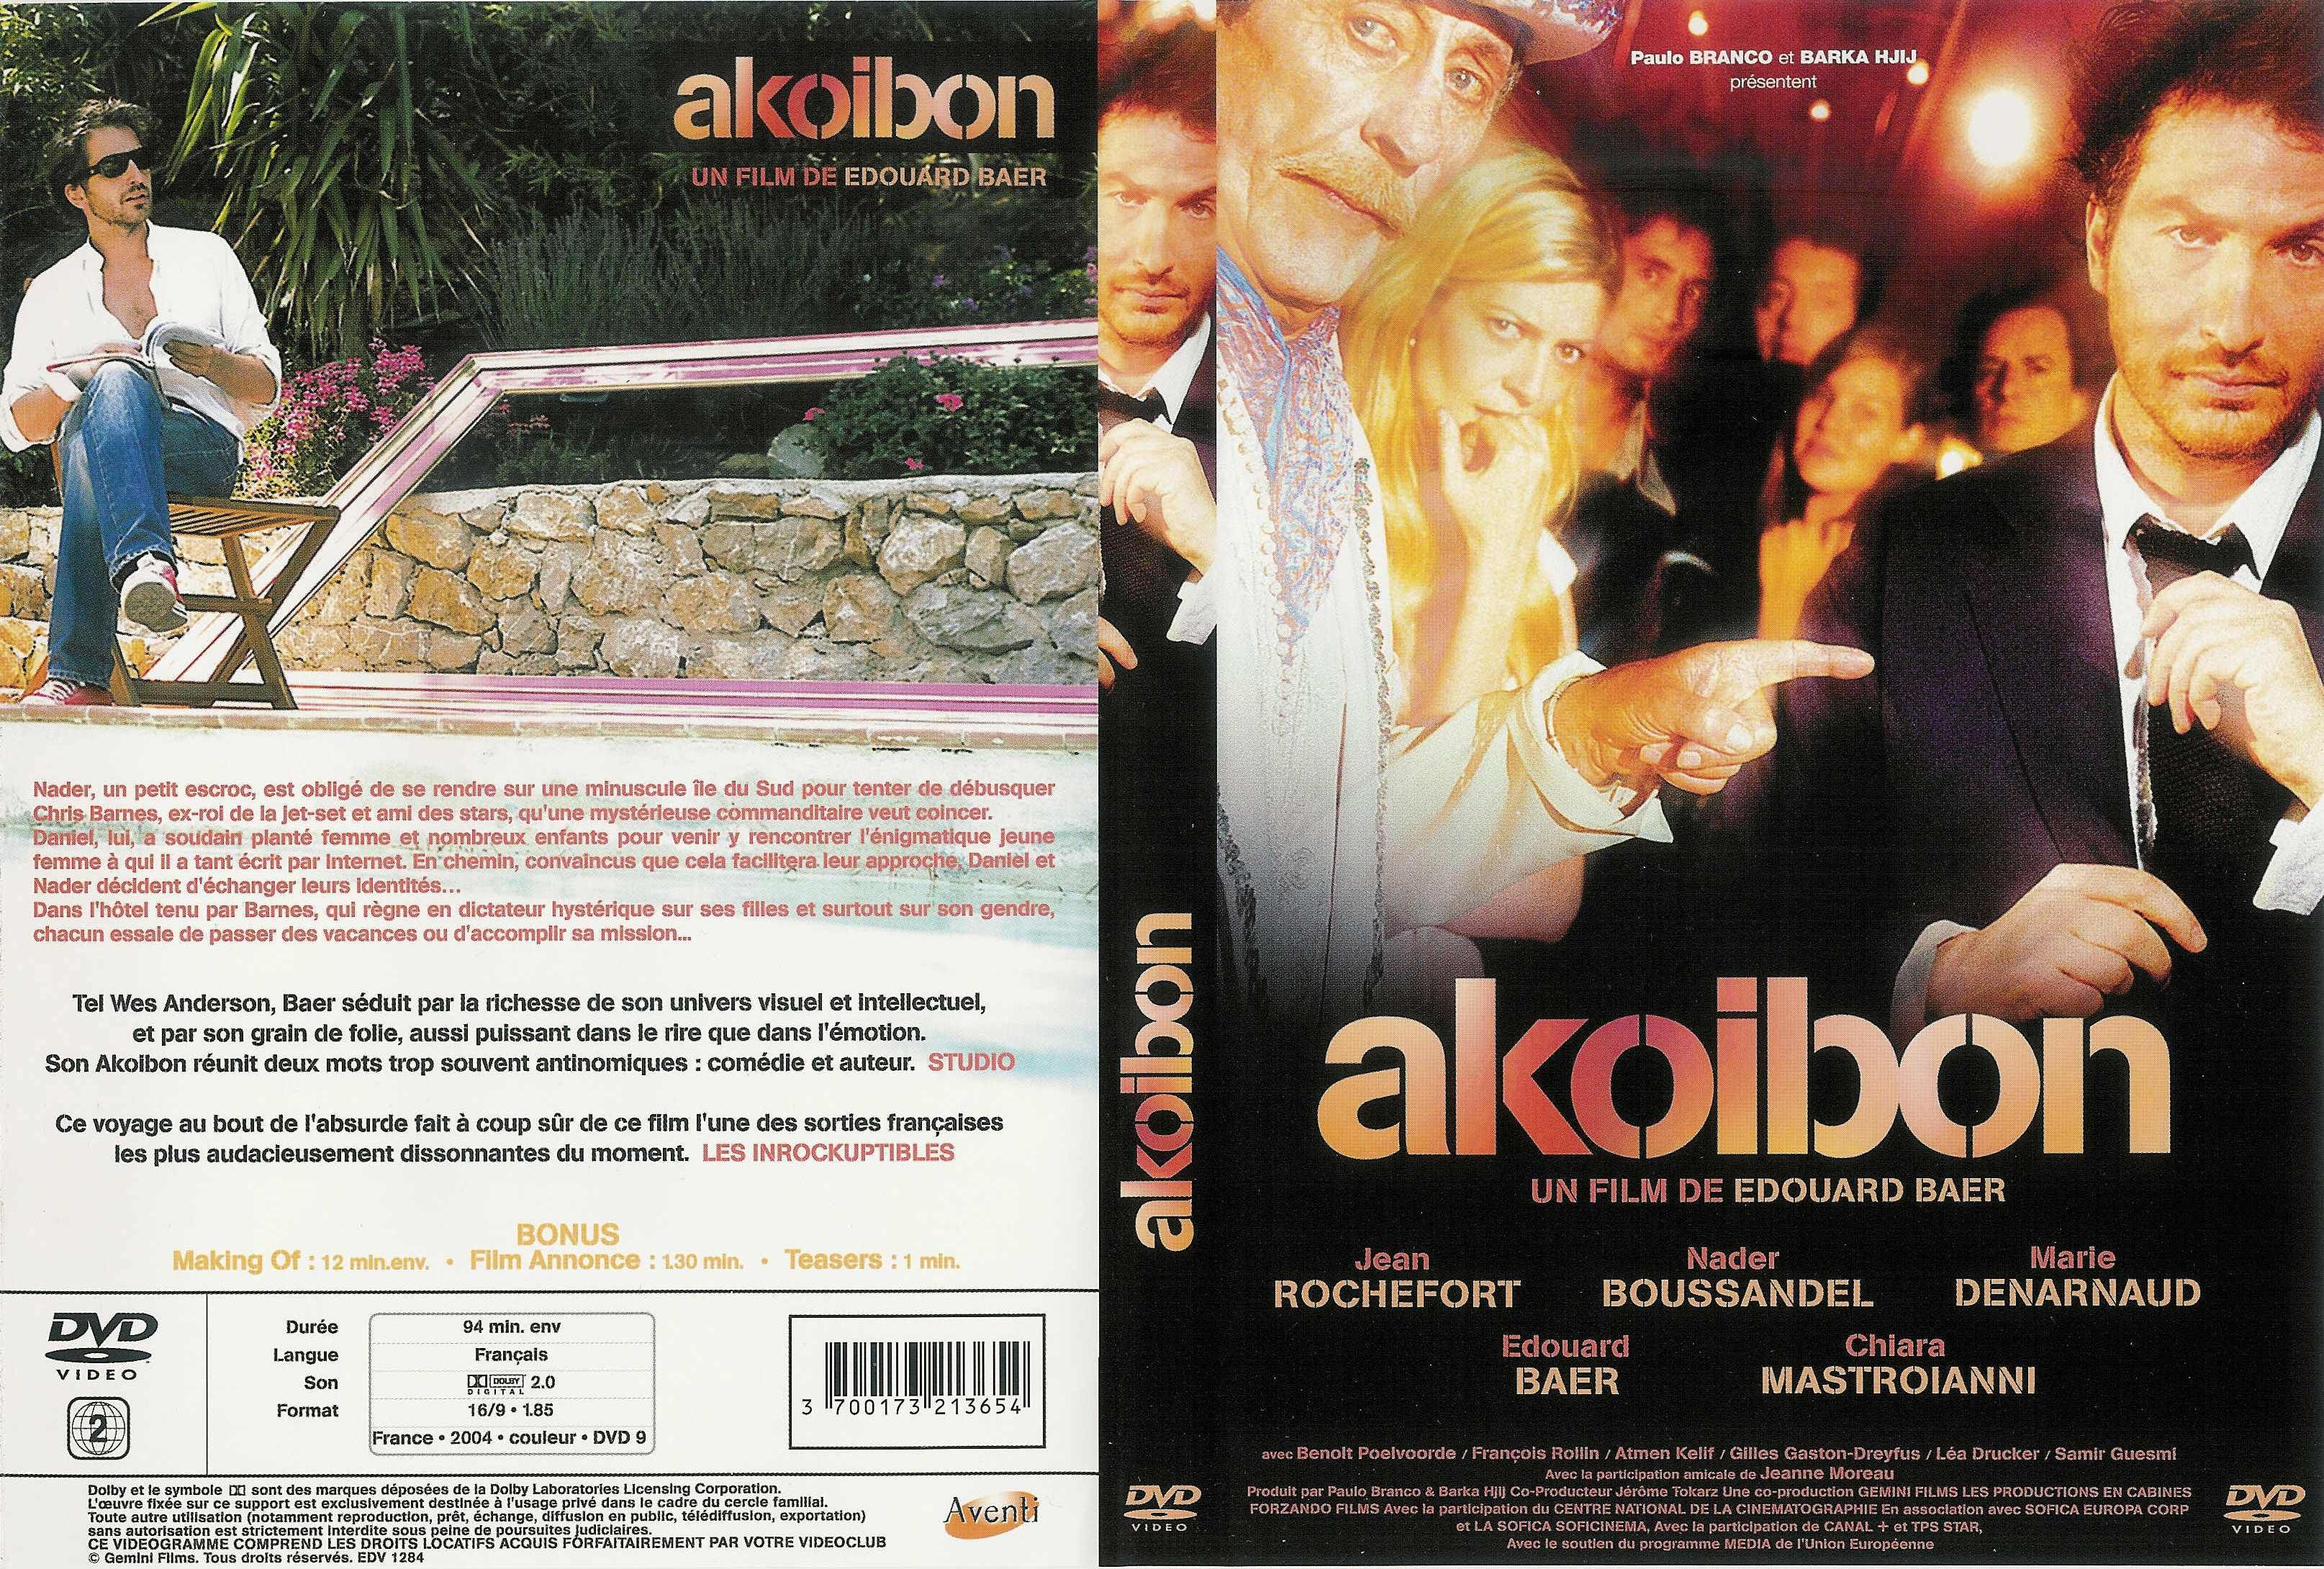 Jaquette DVD Akoibon